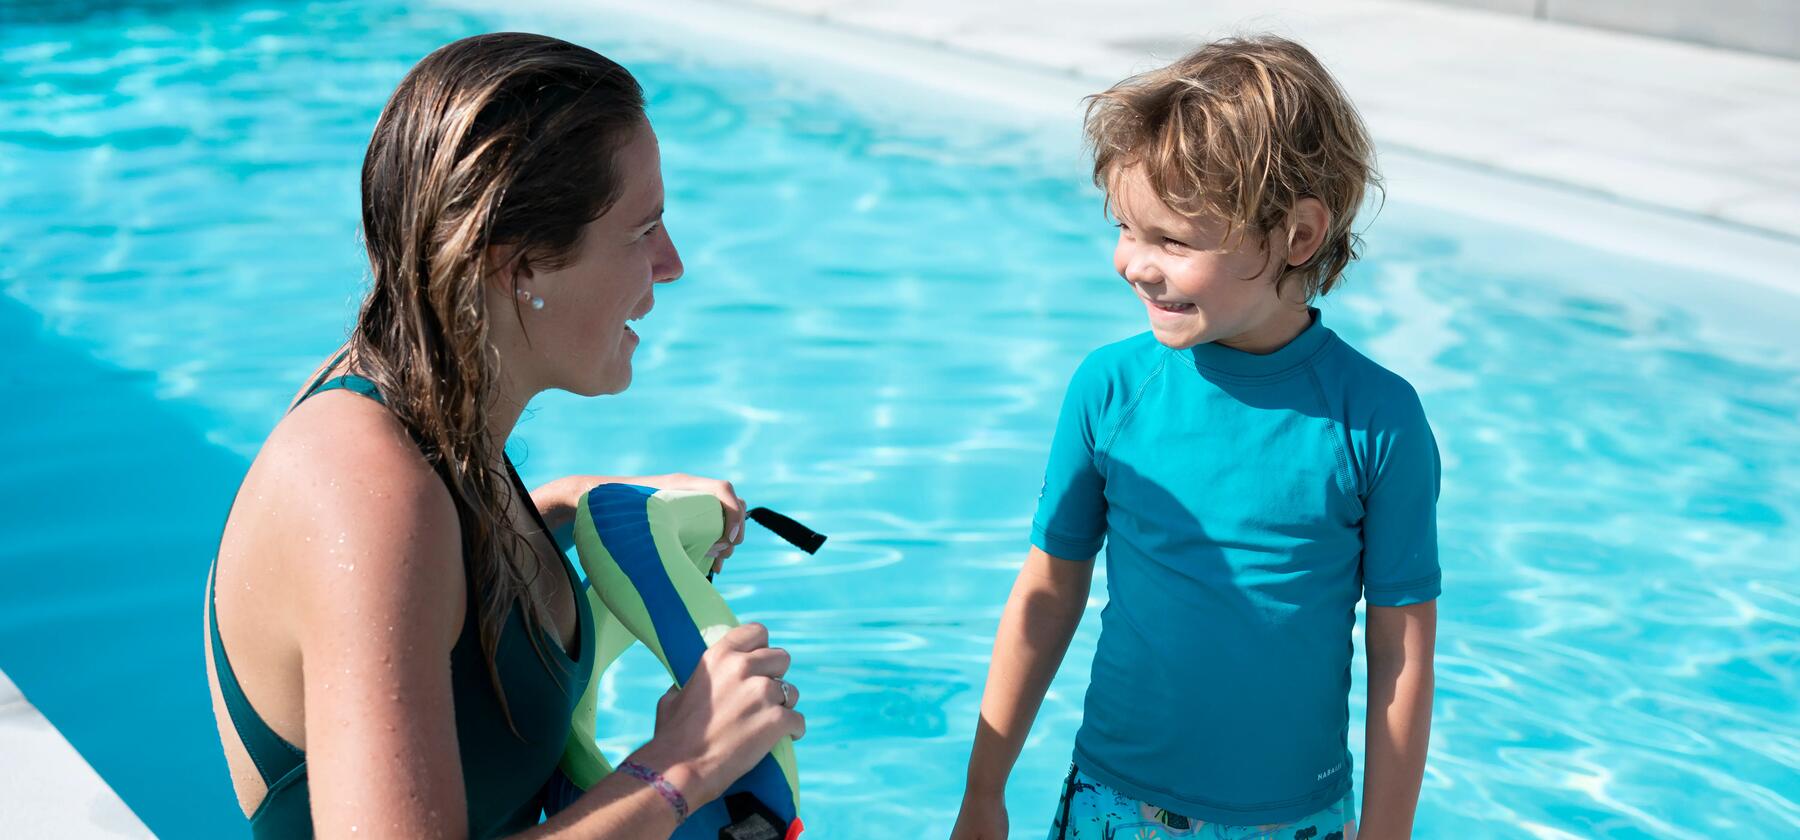 Kind mit UV-Shirt am Pool